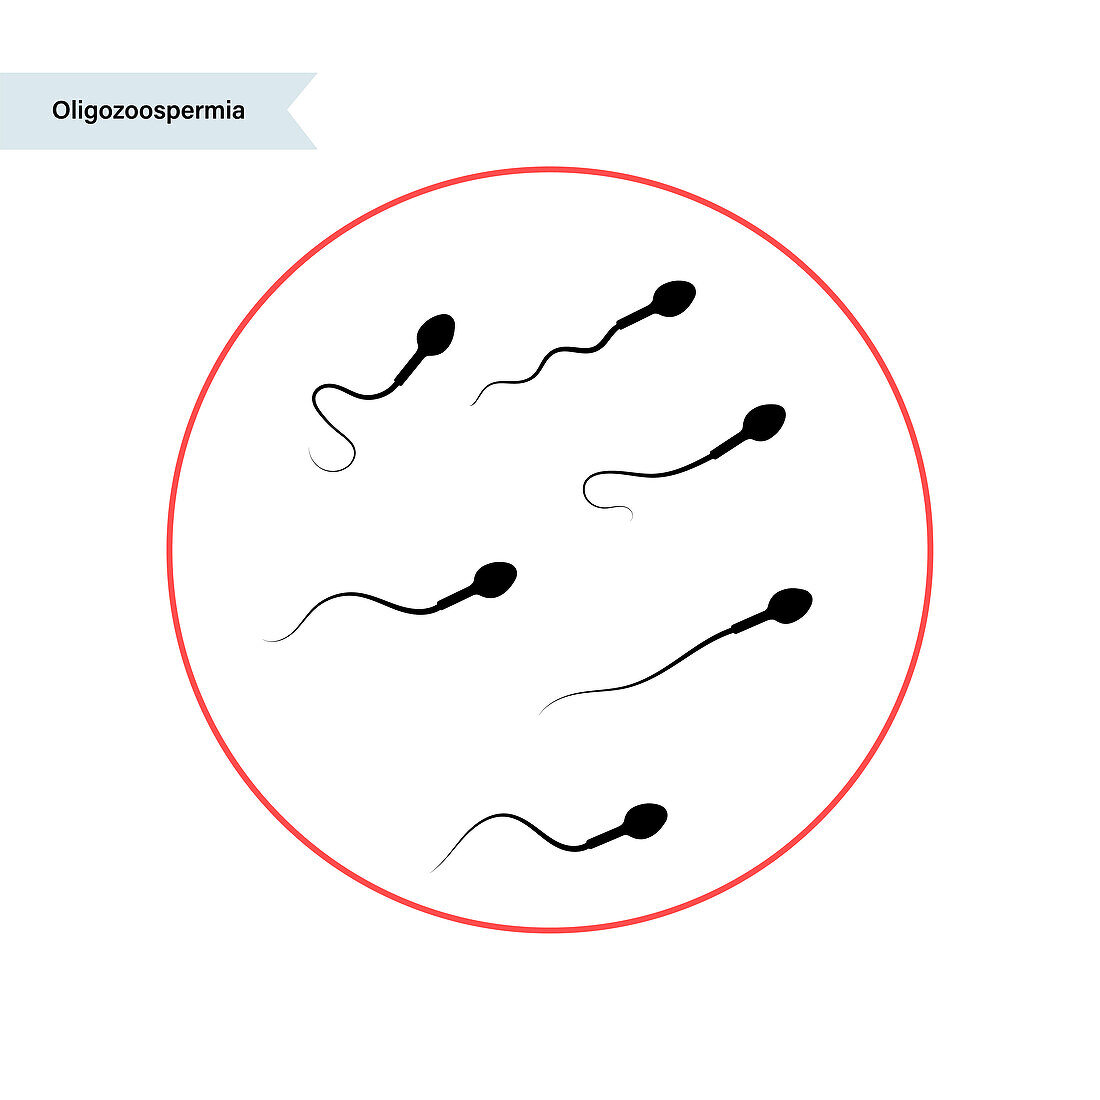 Abnormal sperm, illustration